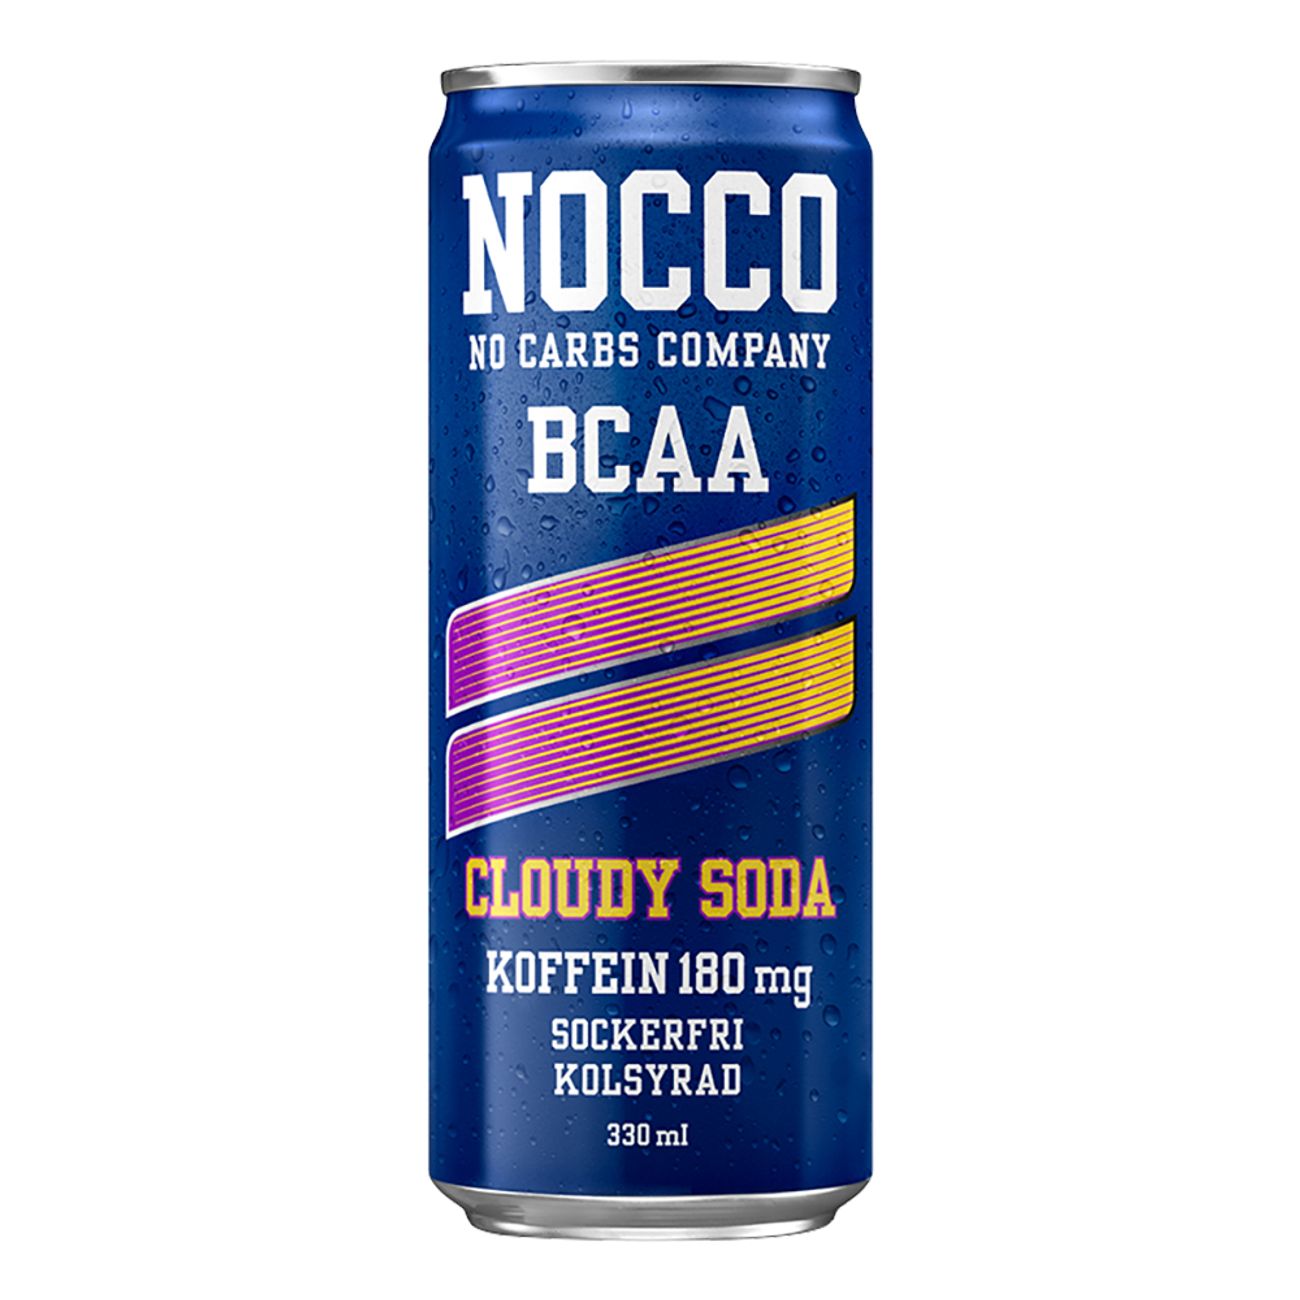 nocco-cloudy-soda-77448-2